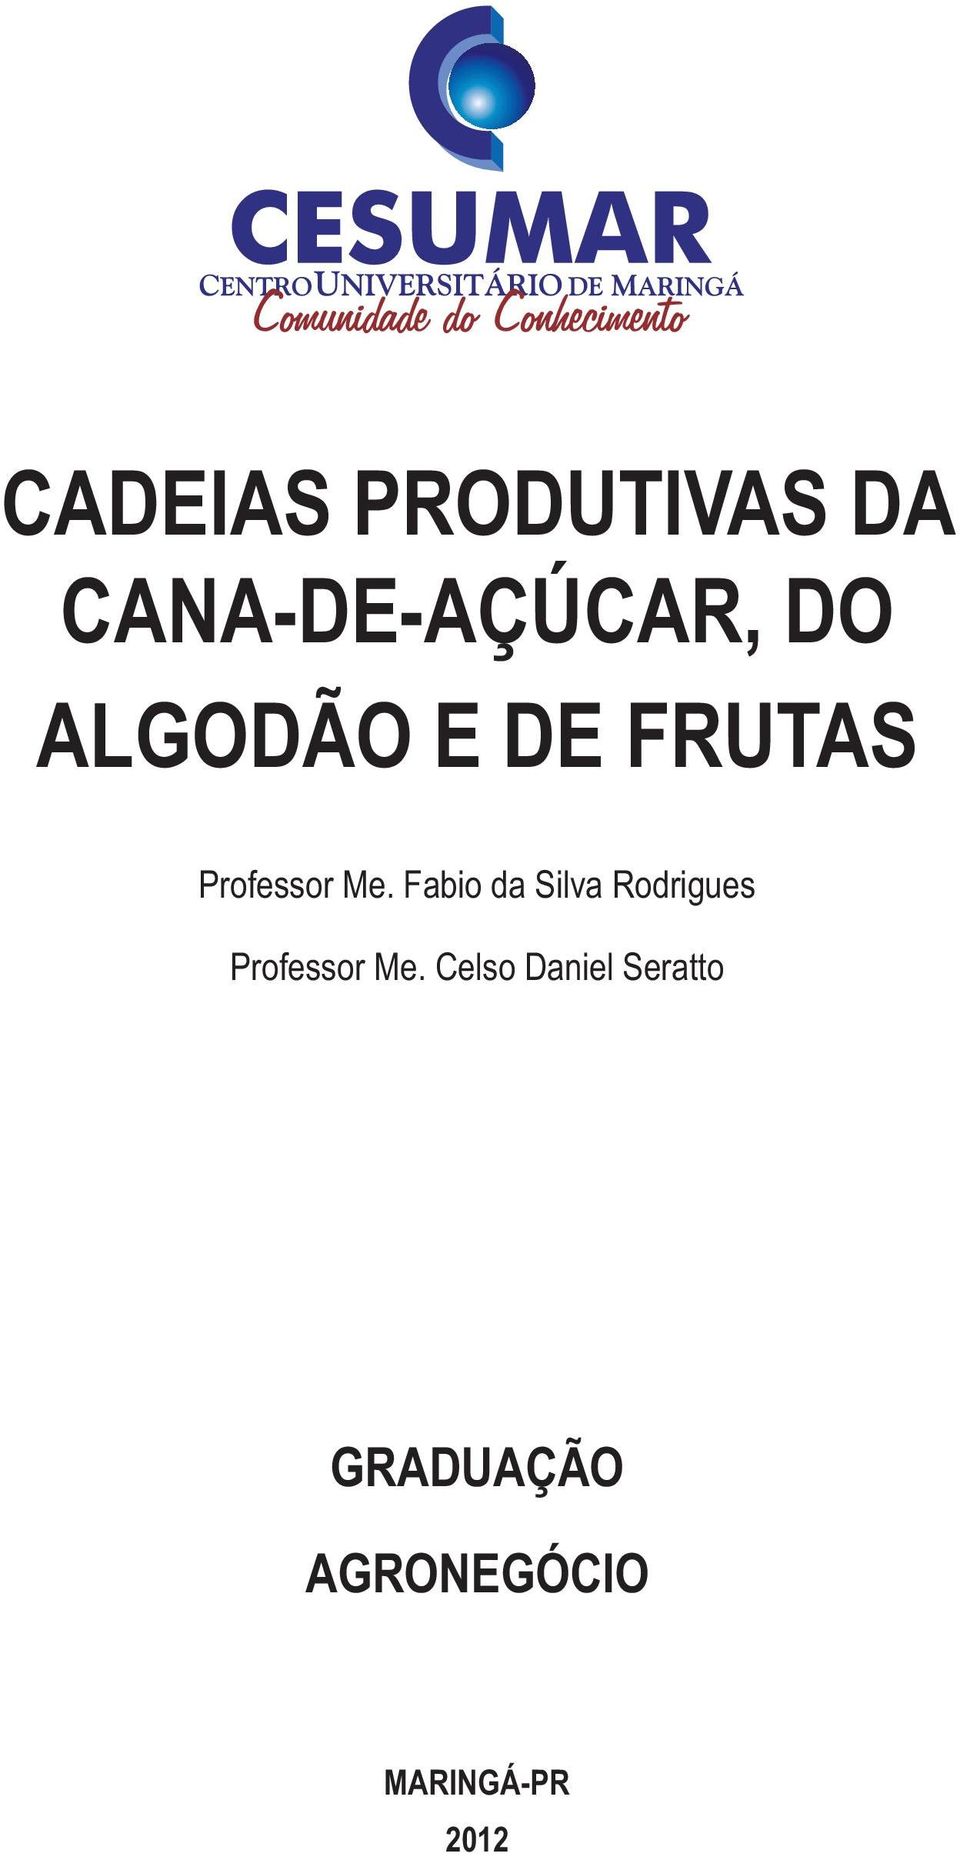 Fabio da Silva Rodrigues Professor Me.